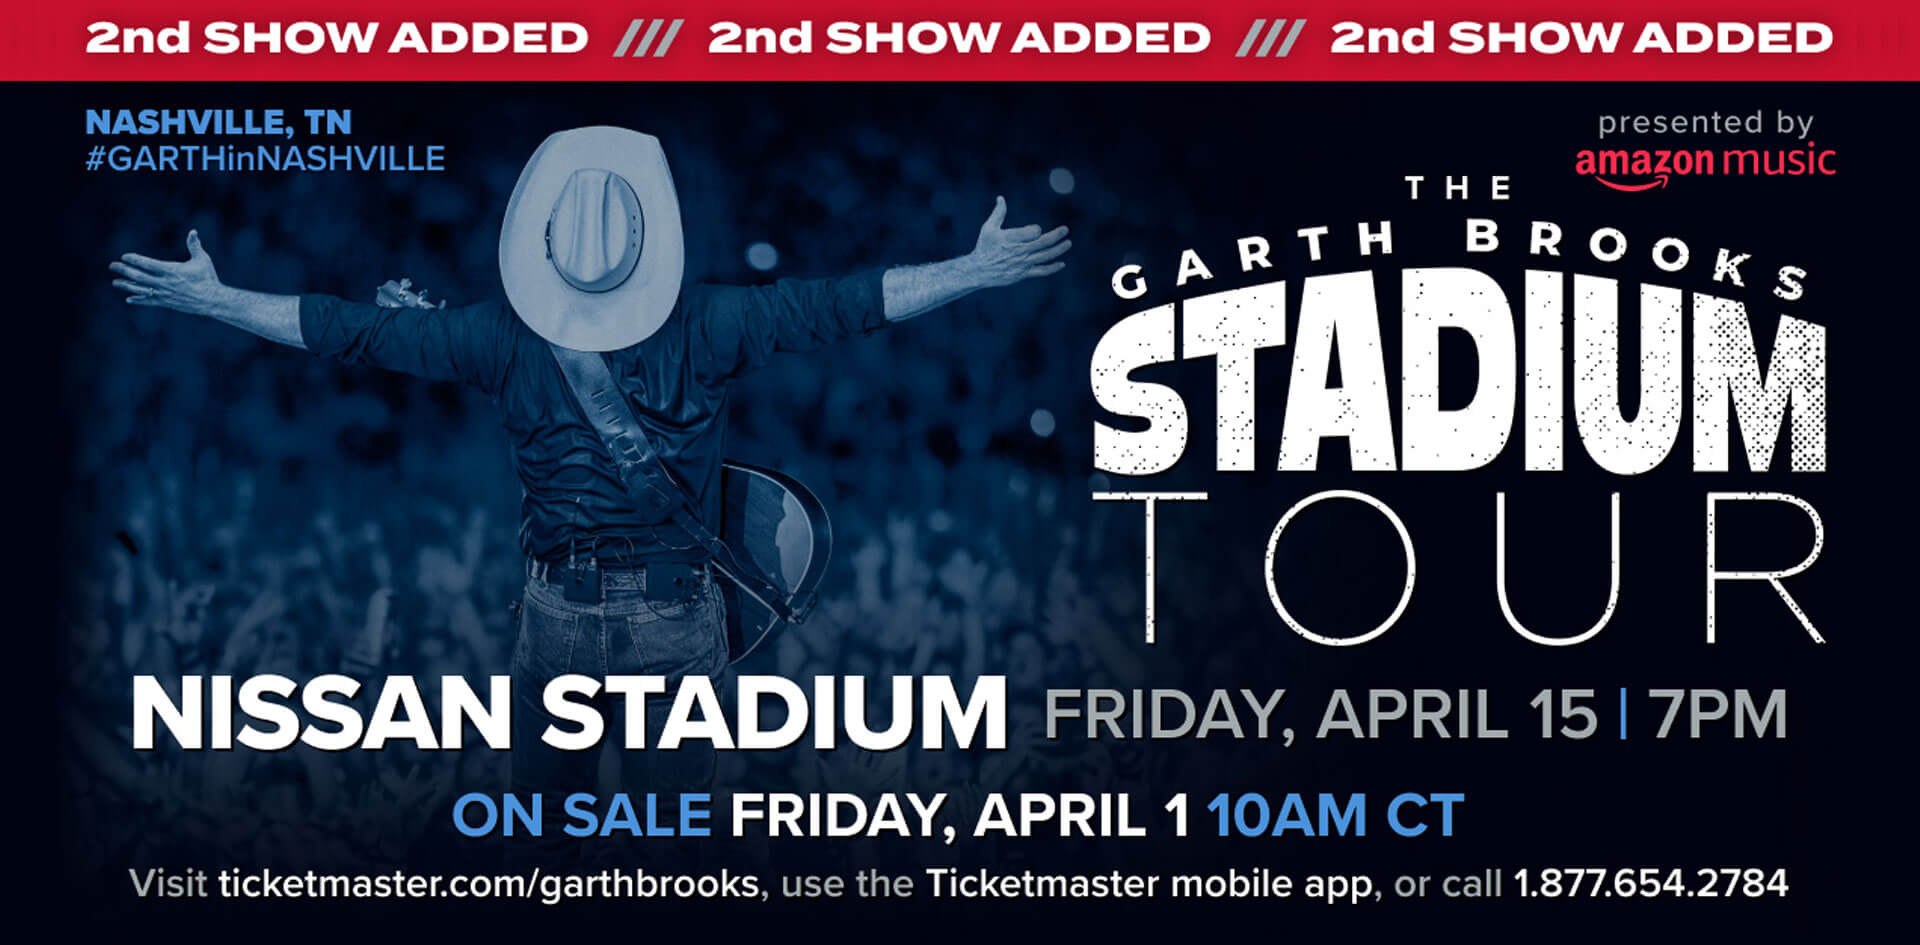 Garth Brooks Adds Brand New Opening Night in Nashville's Nissan Stadium